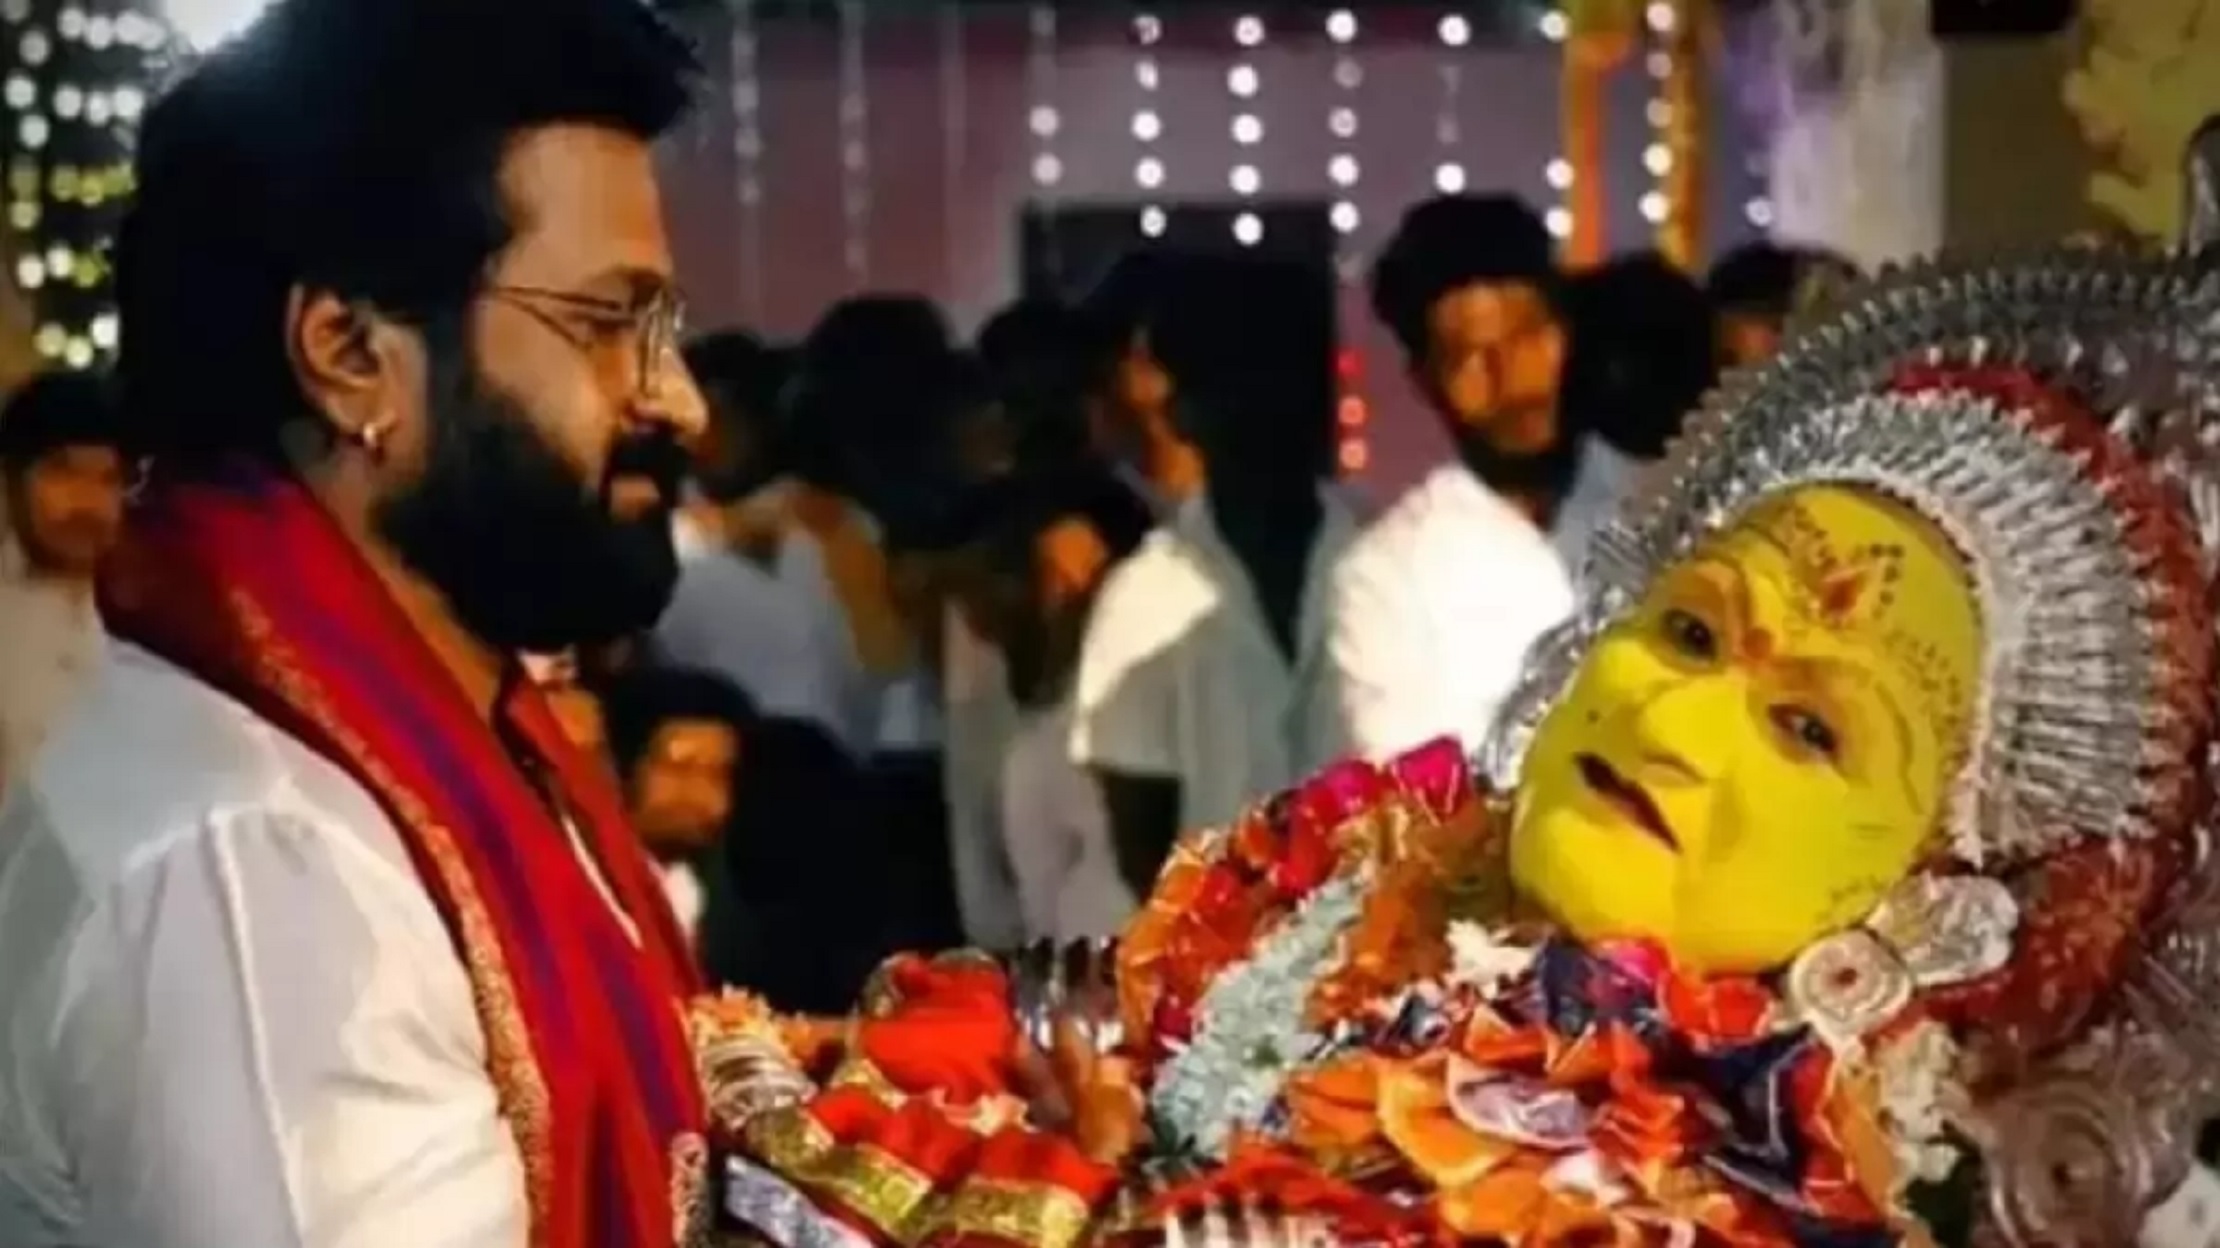 Watch : Kantara star Rishab Shetty takes blessings of ‘Daiva’ at Bhoota Kola festival, video goes viral